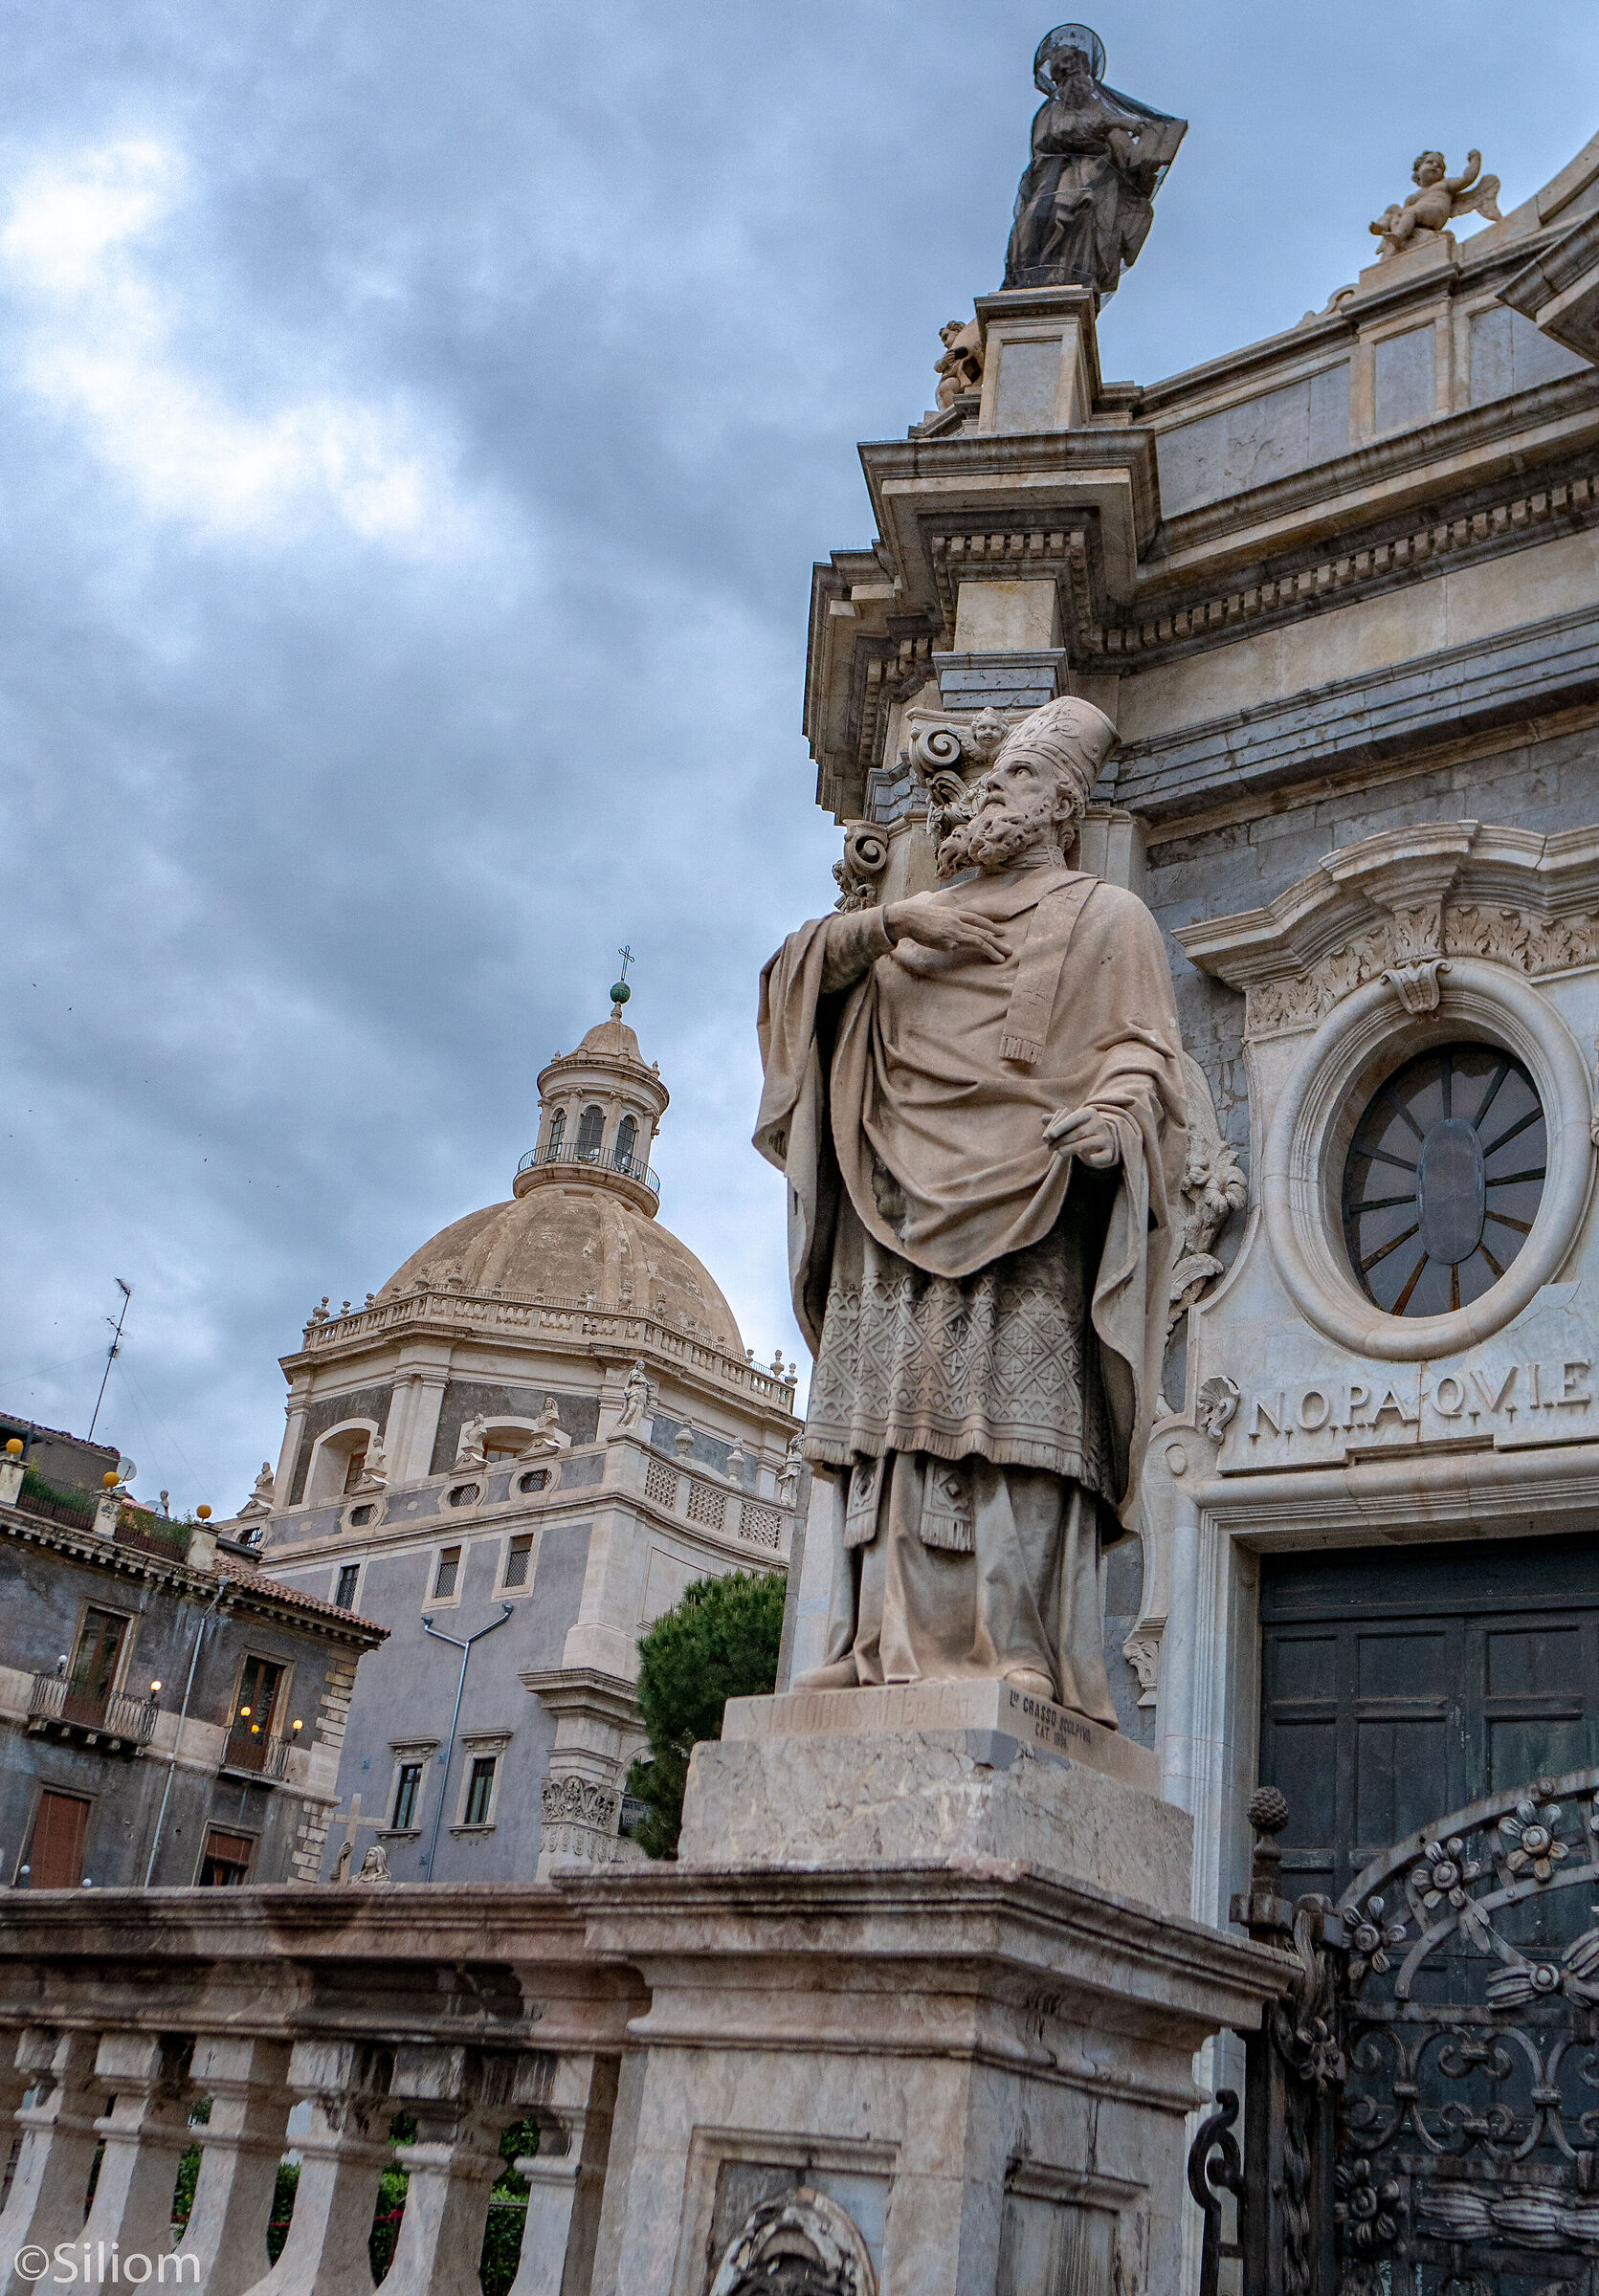 Statuas of the Duomo...